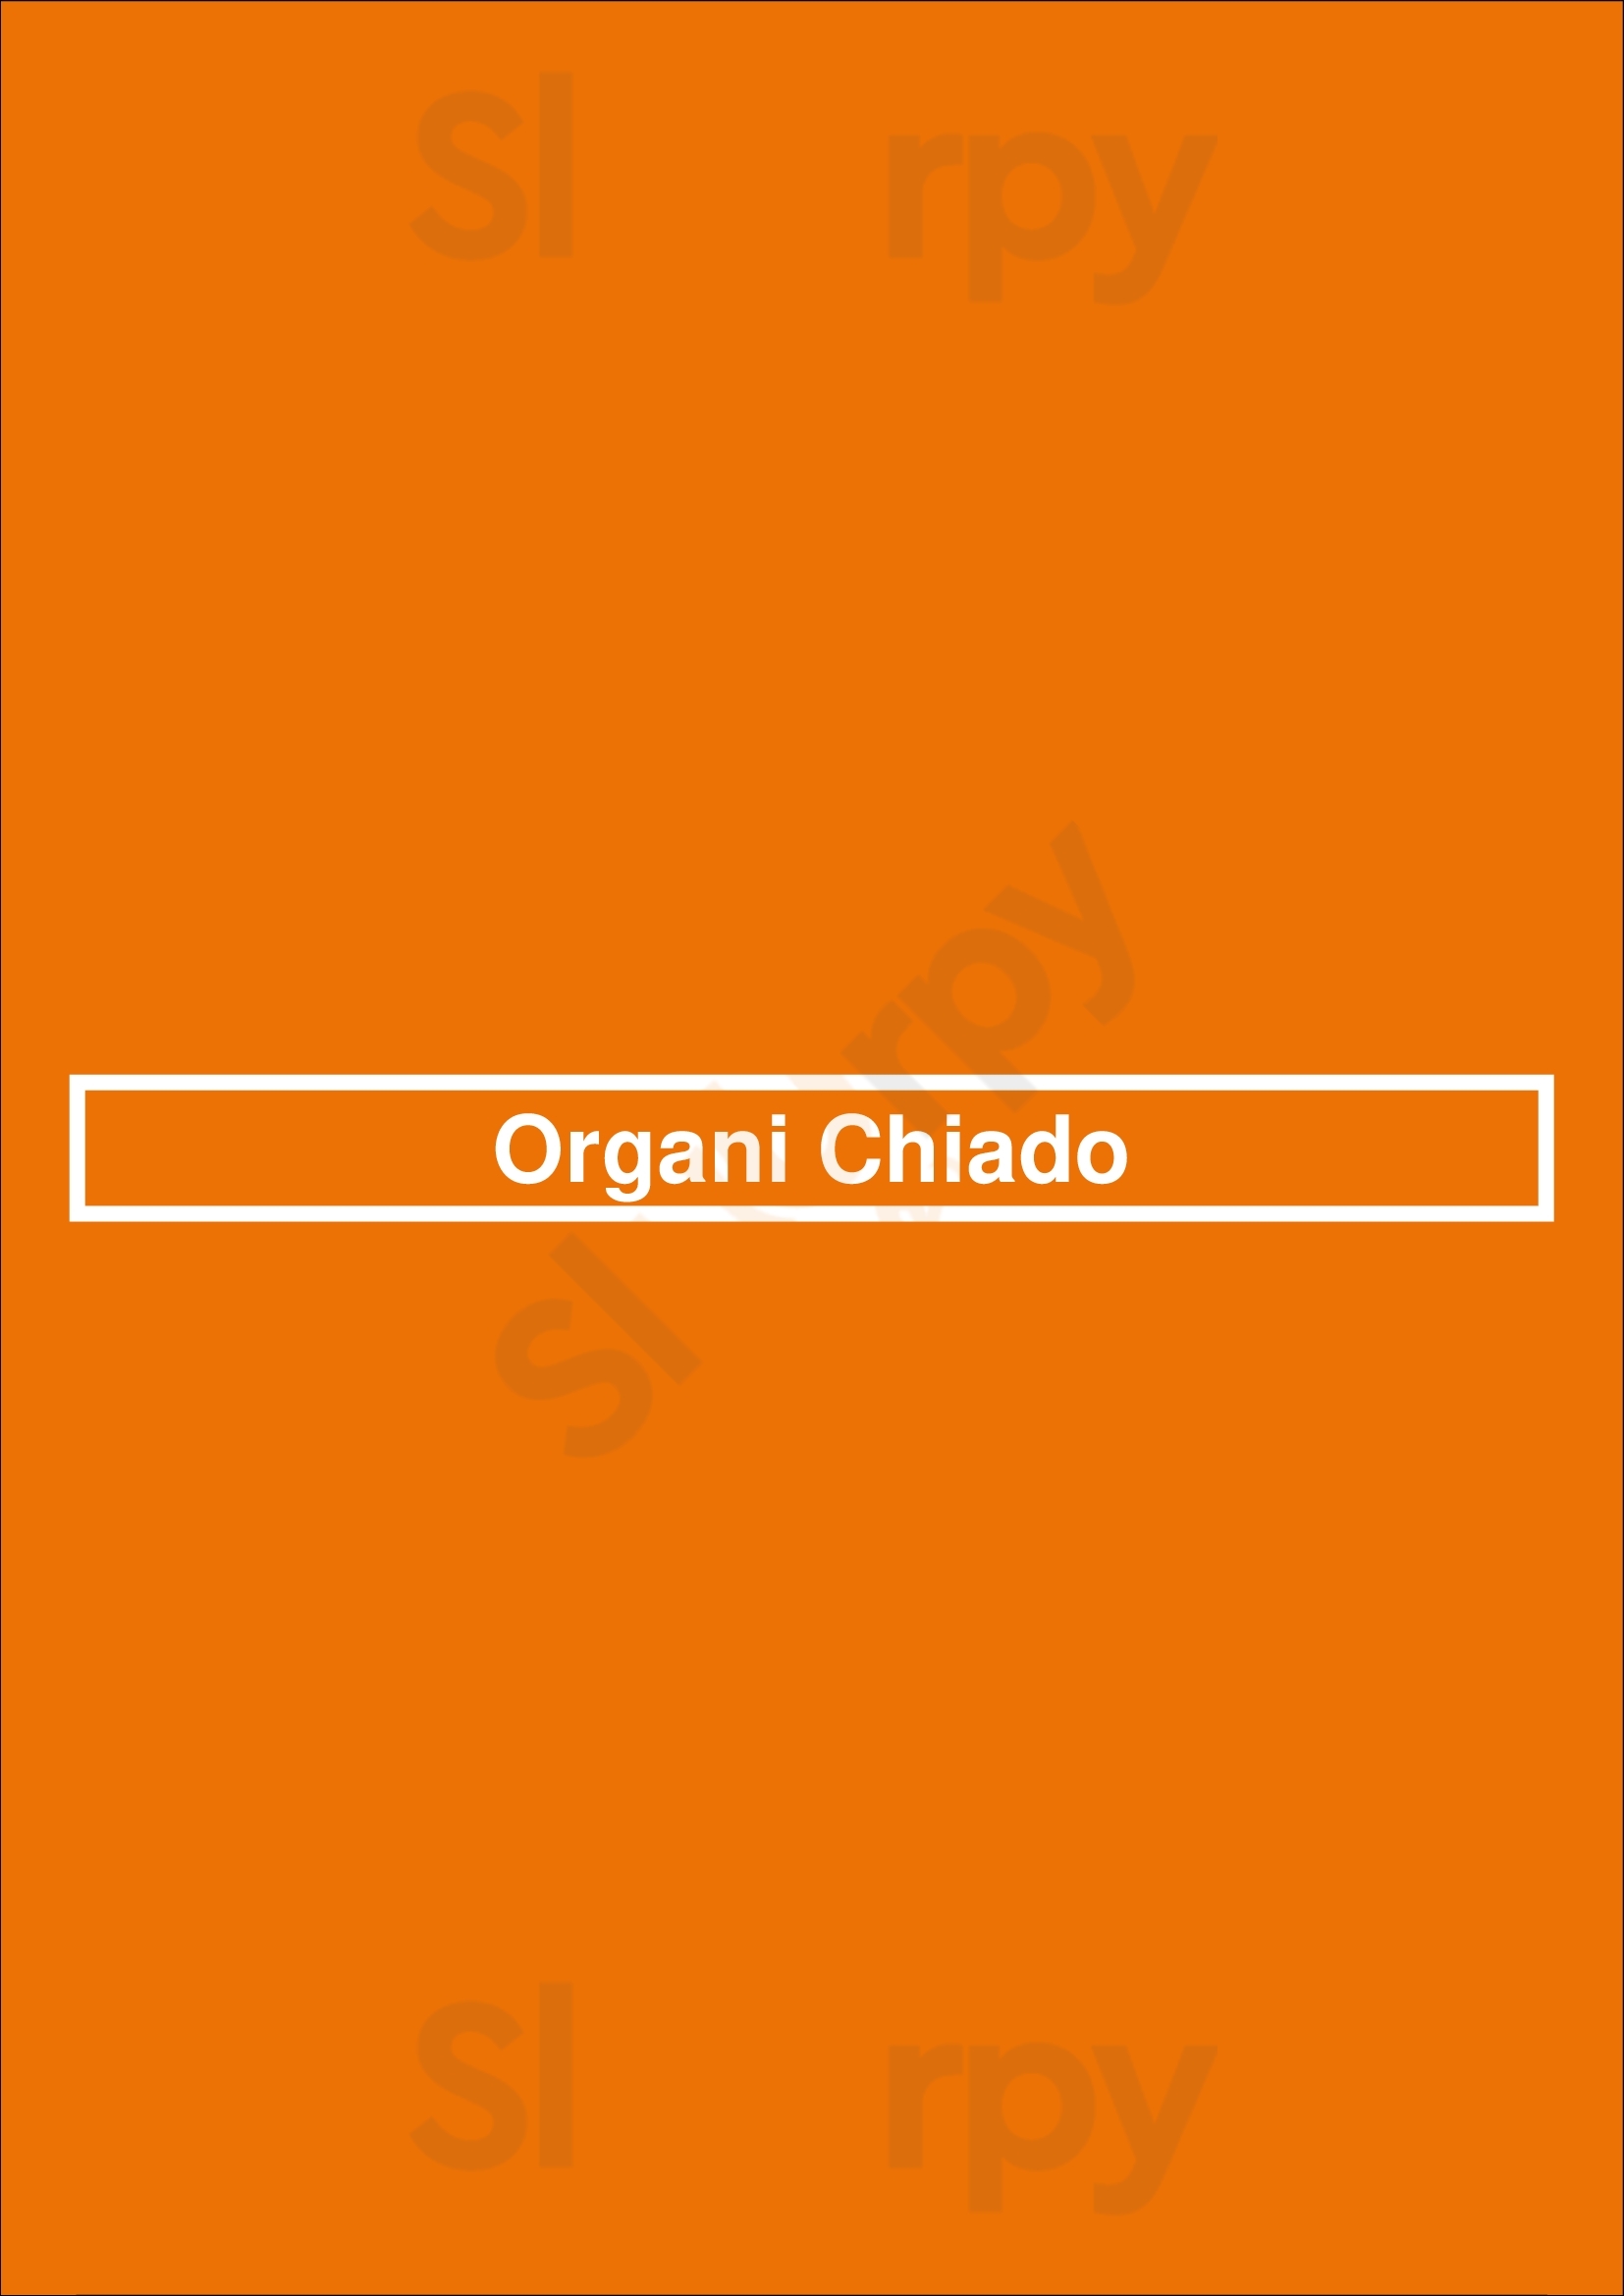 Organi Chiado Lisboa Menu - 1